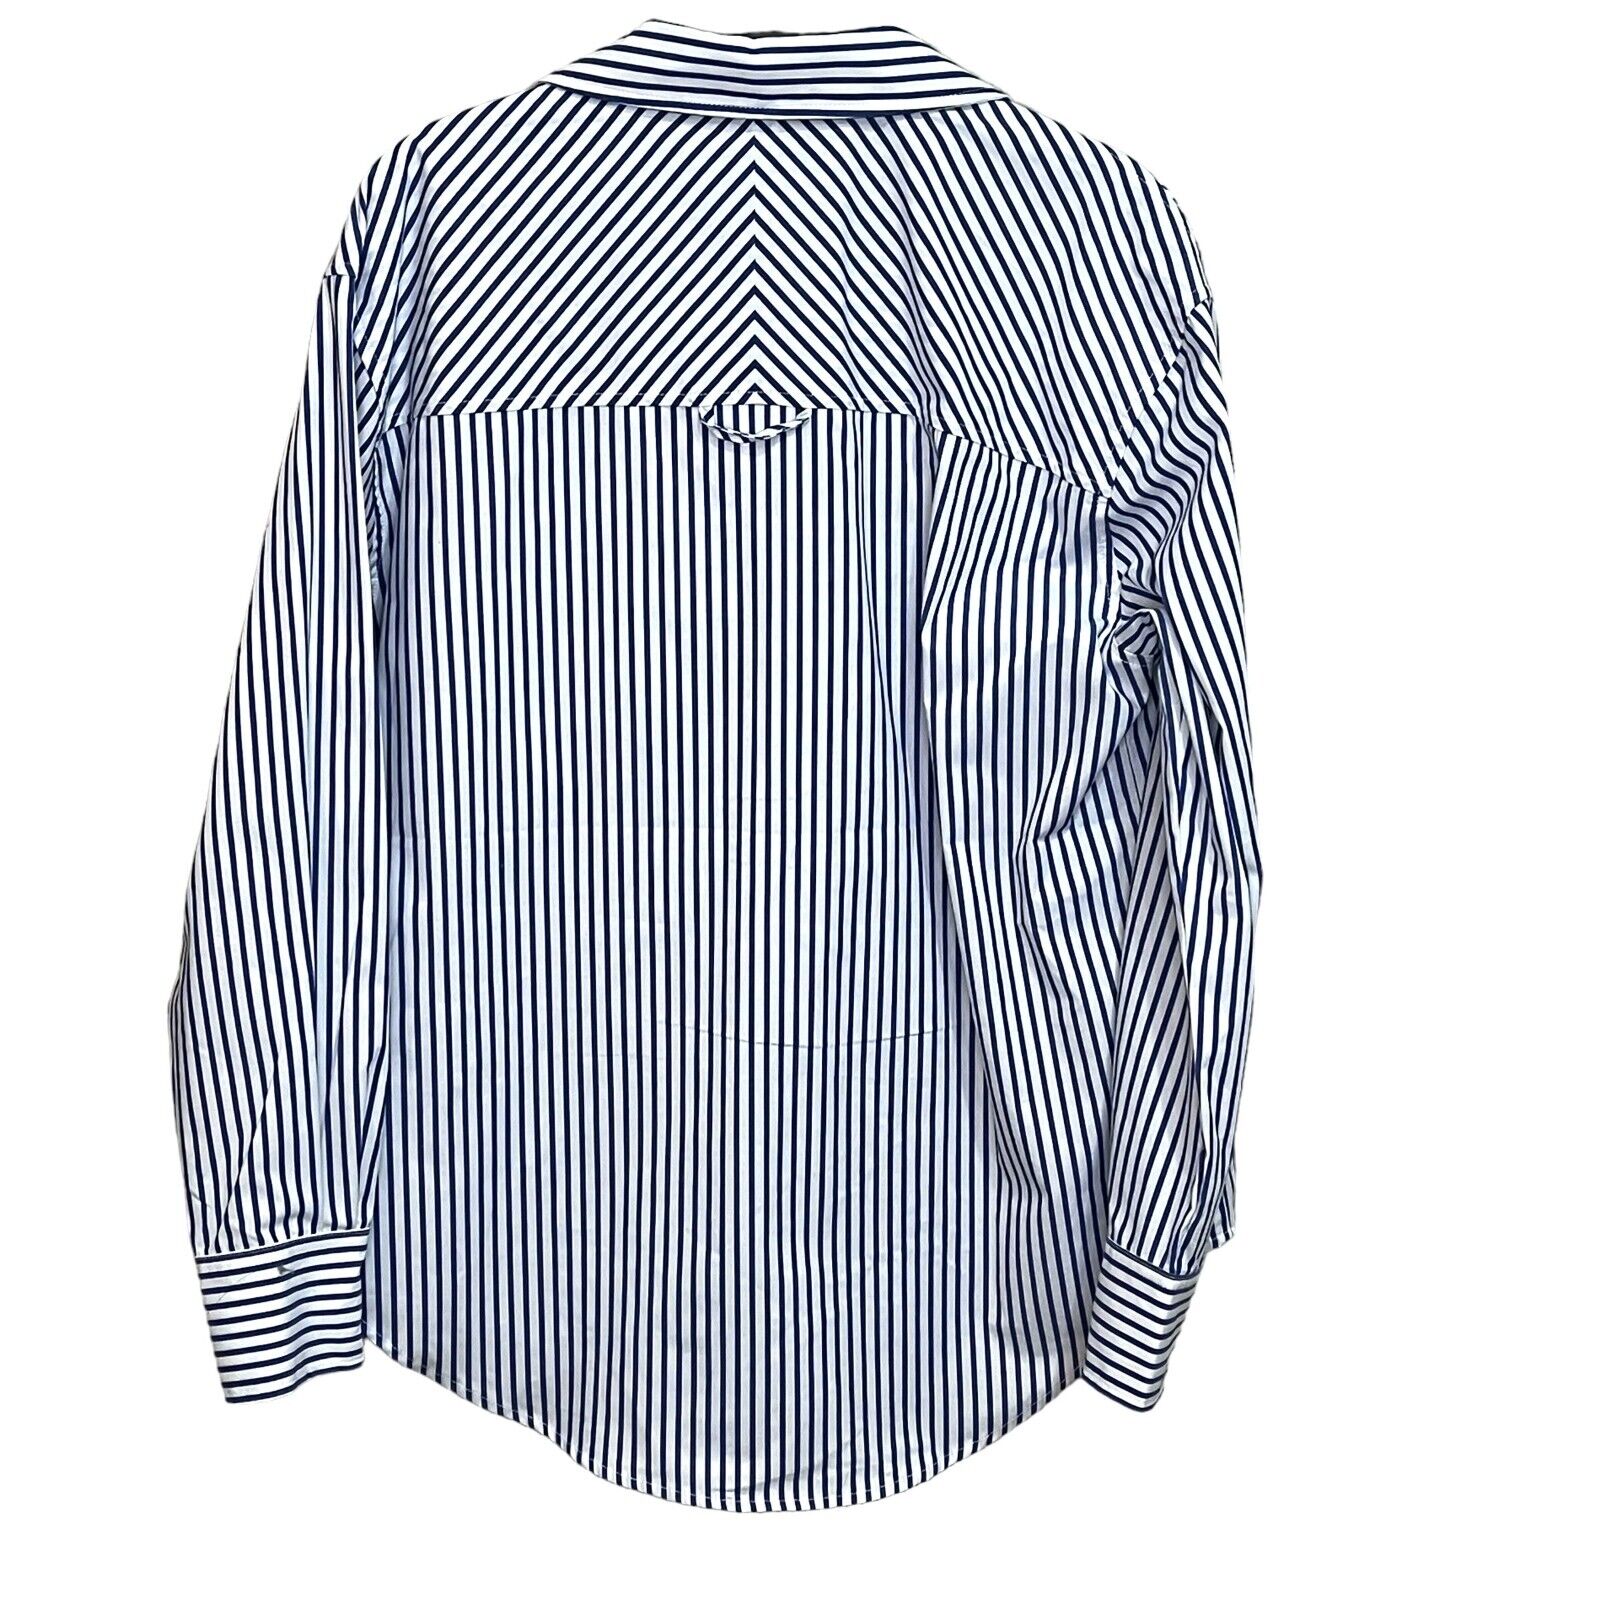 Casa Cabana Blue White Stripe Button Down Shirt Size Small NEW $58